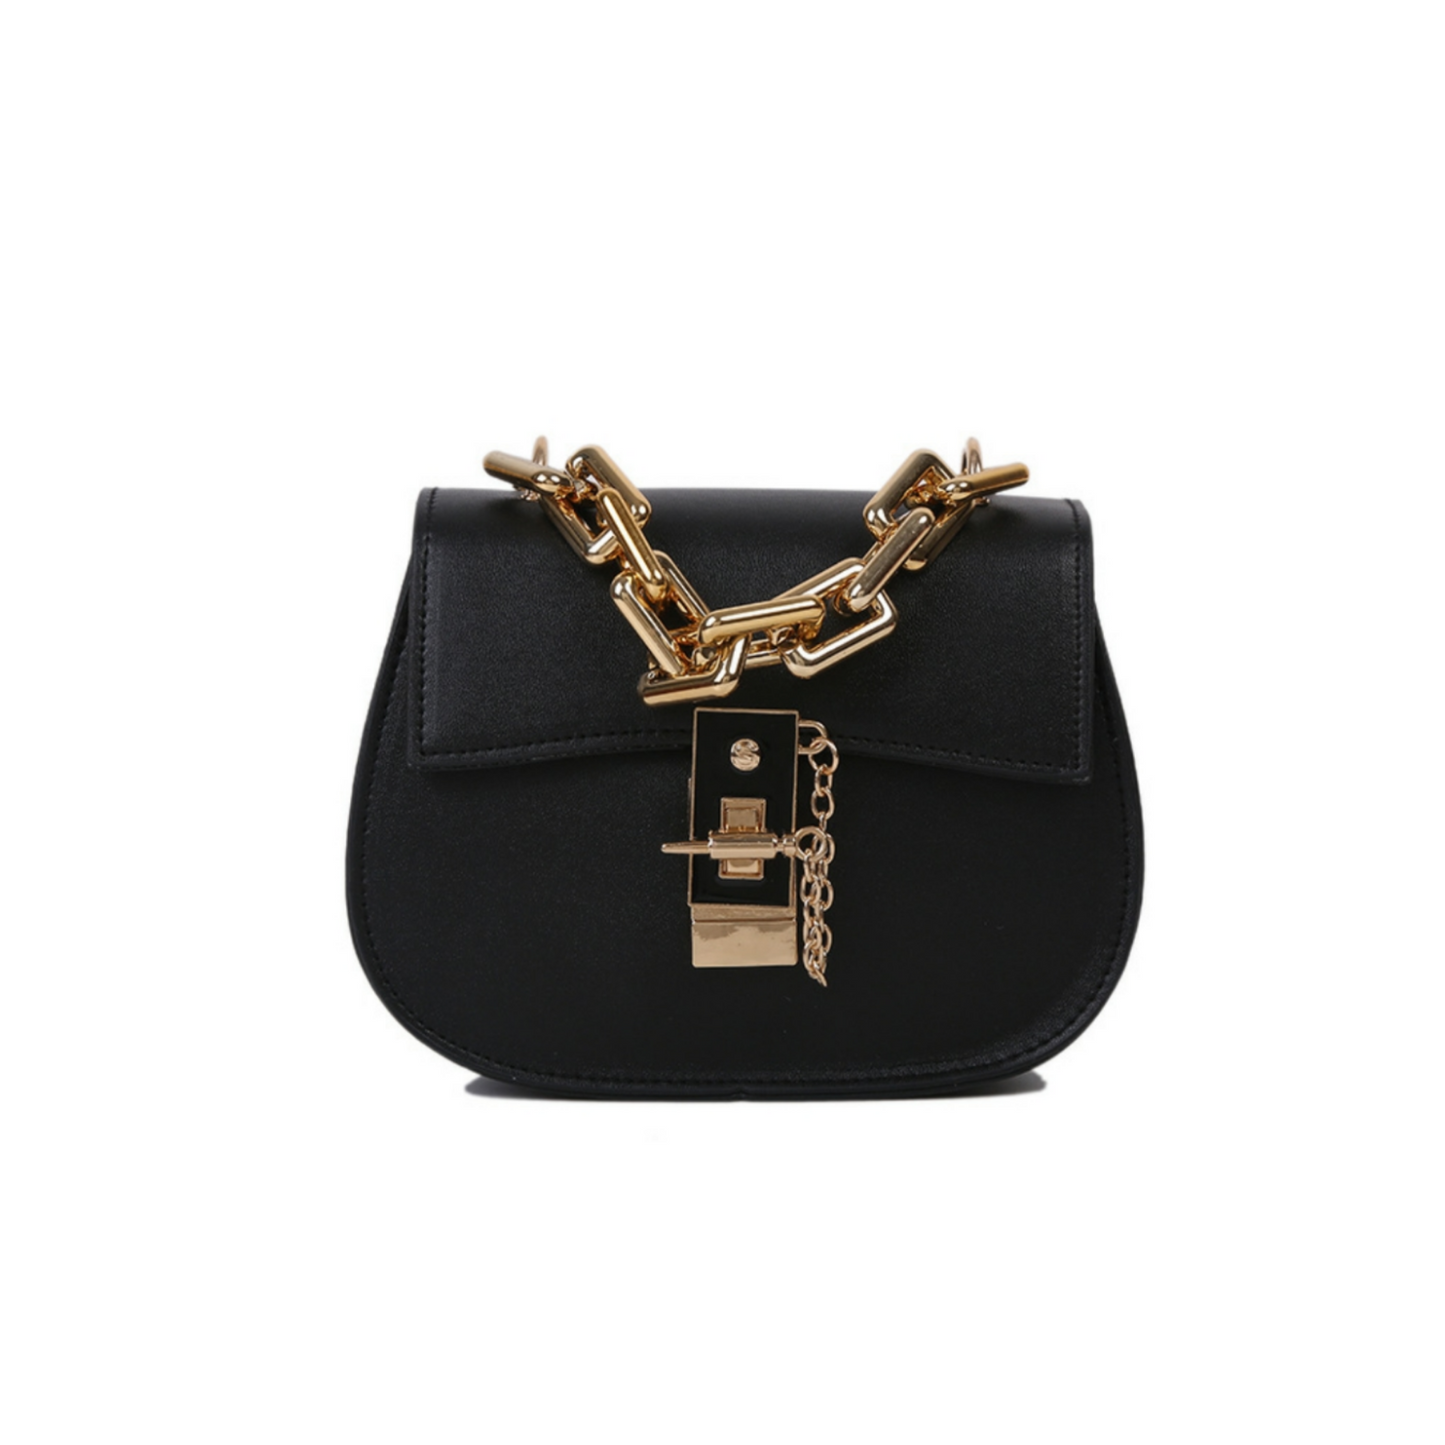 Chloe Inspired Handbag - Black